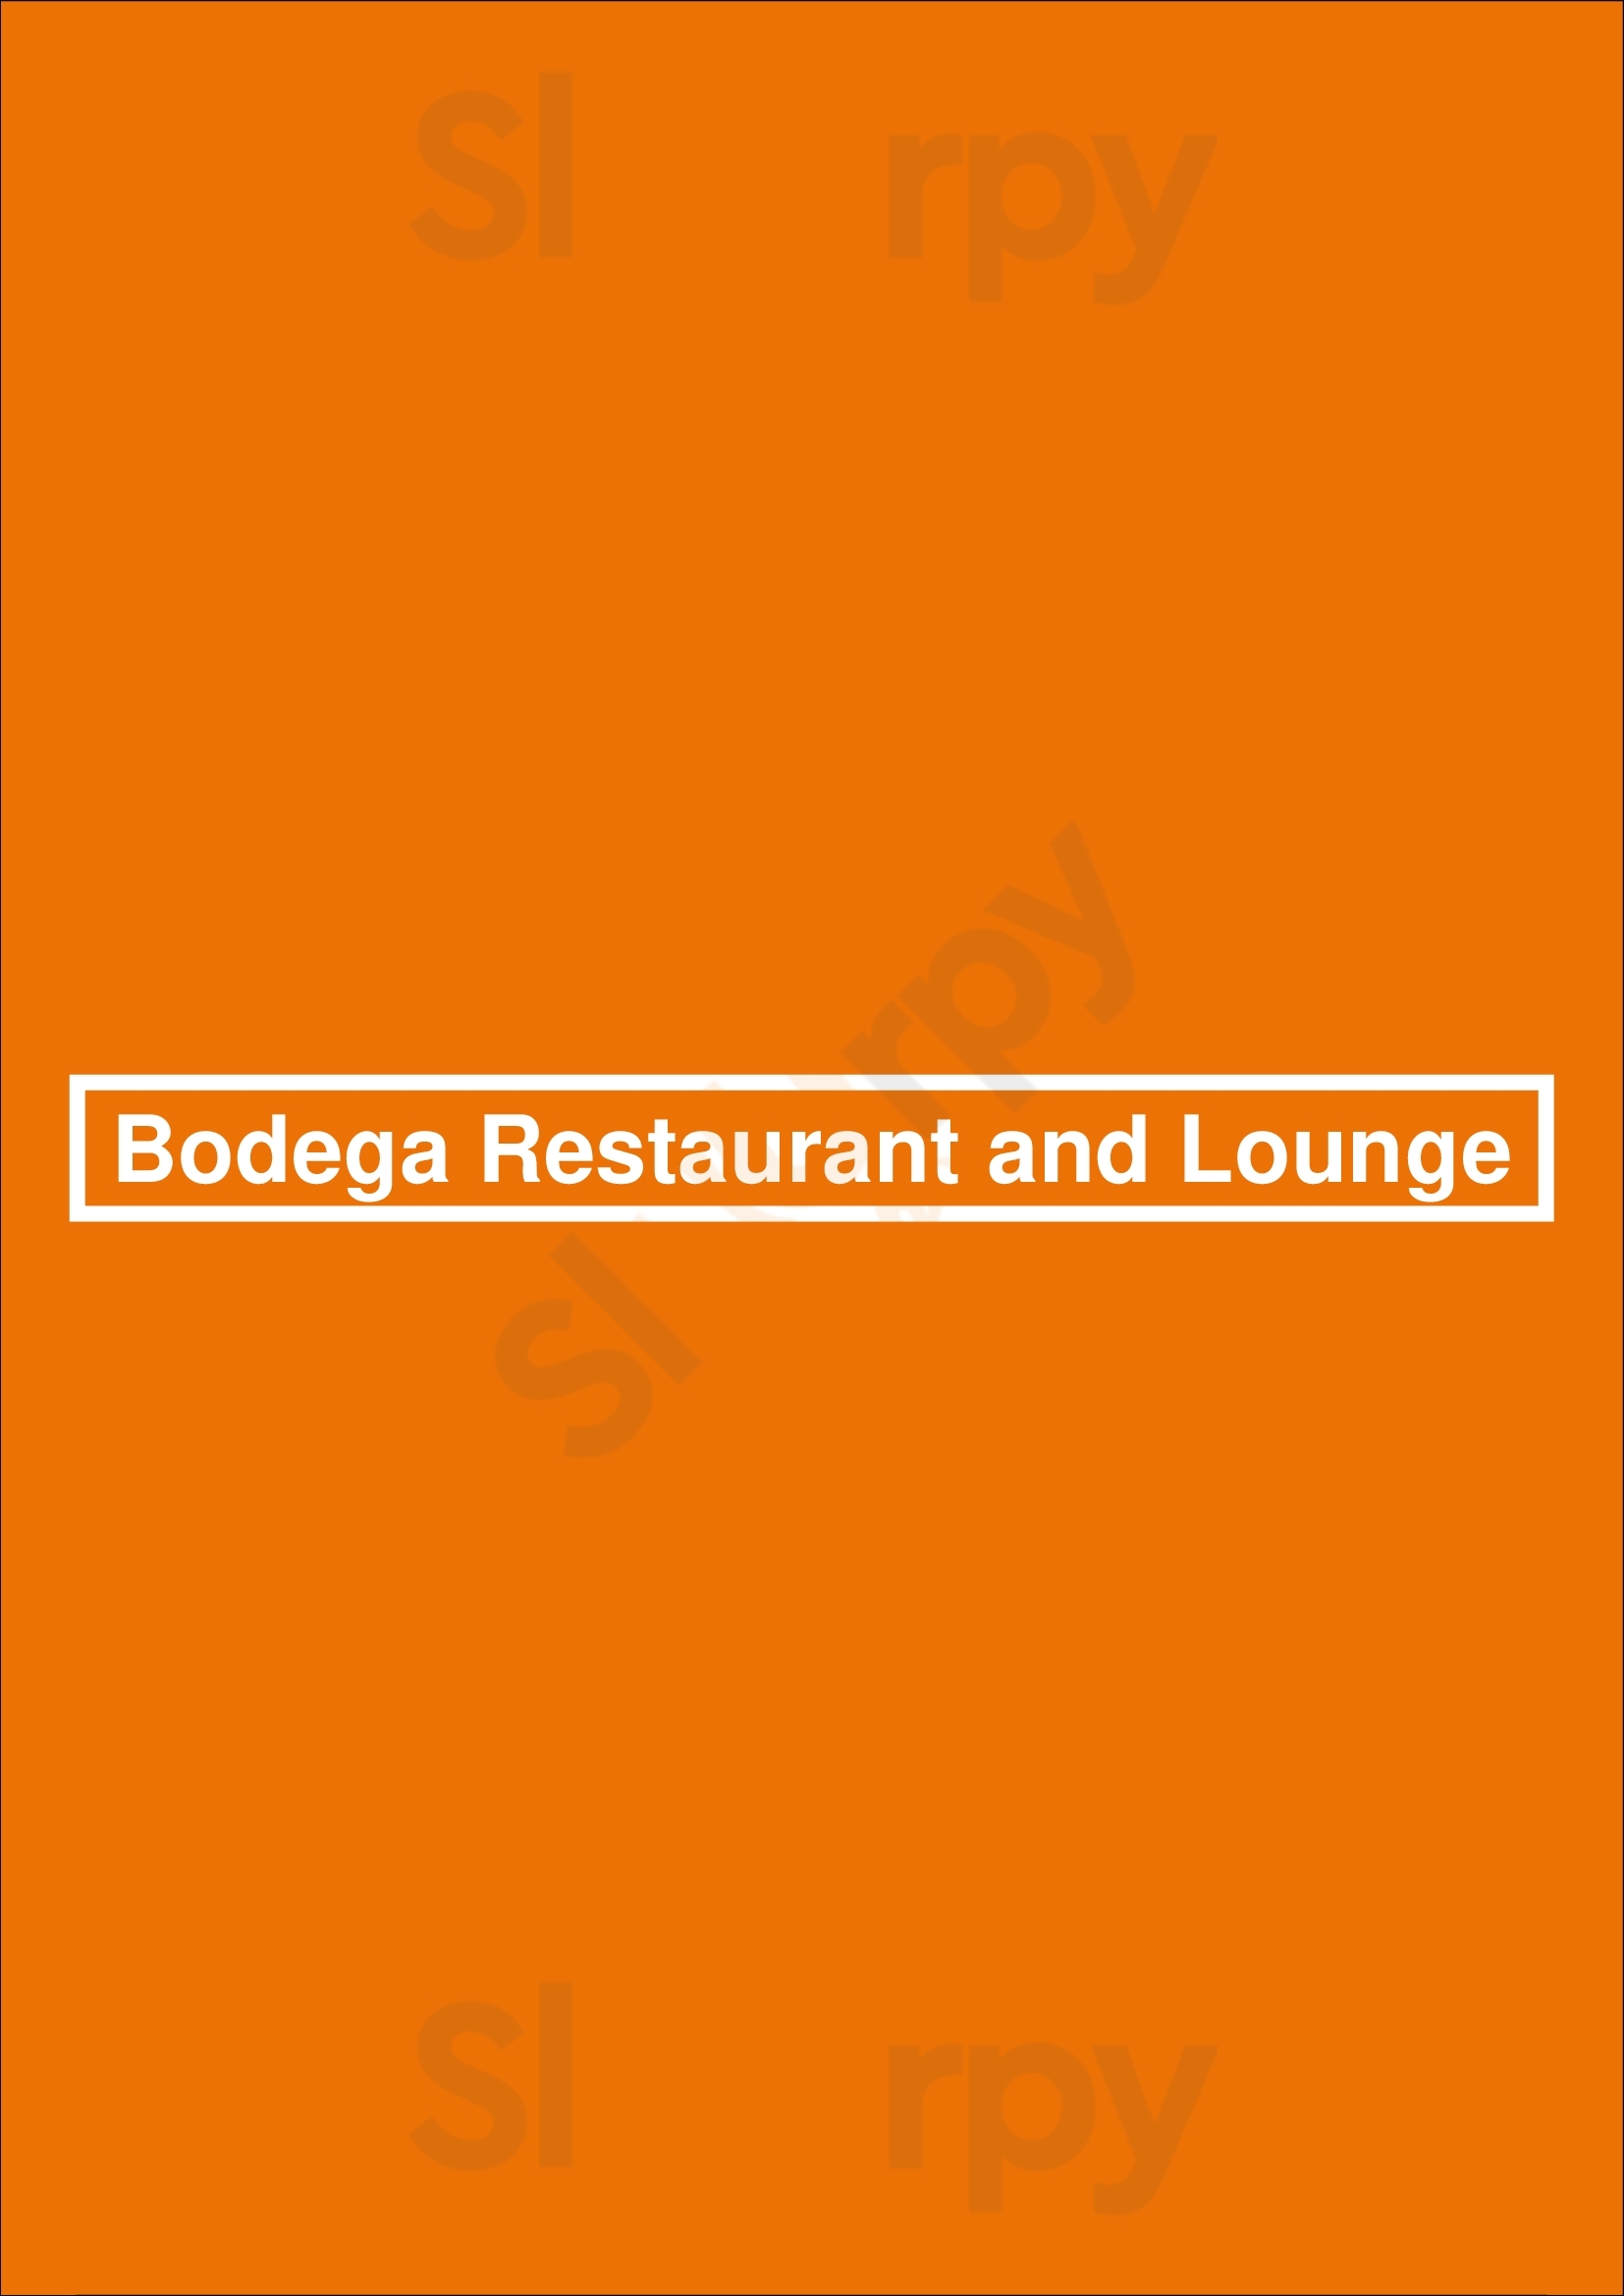 Bodega Restaurant And Lounge Cleveland Heights Menu - 1